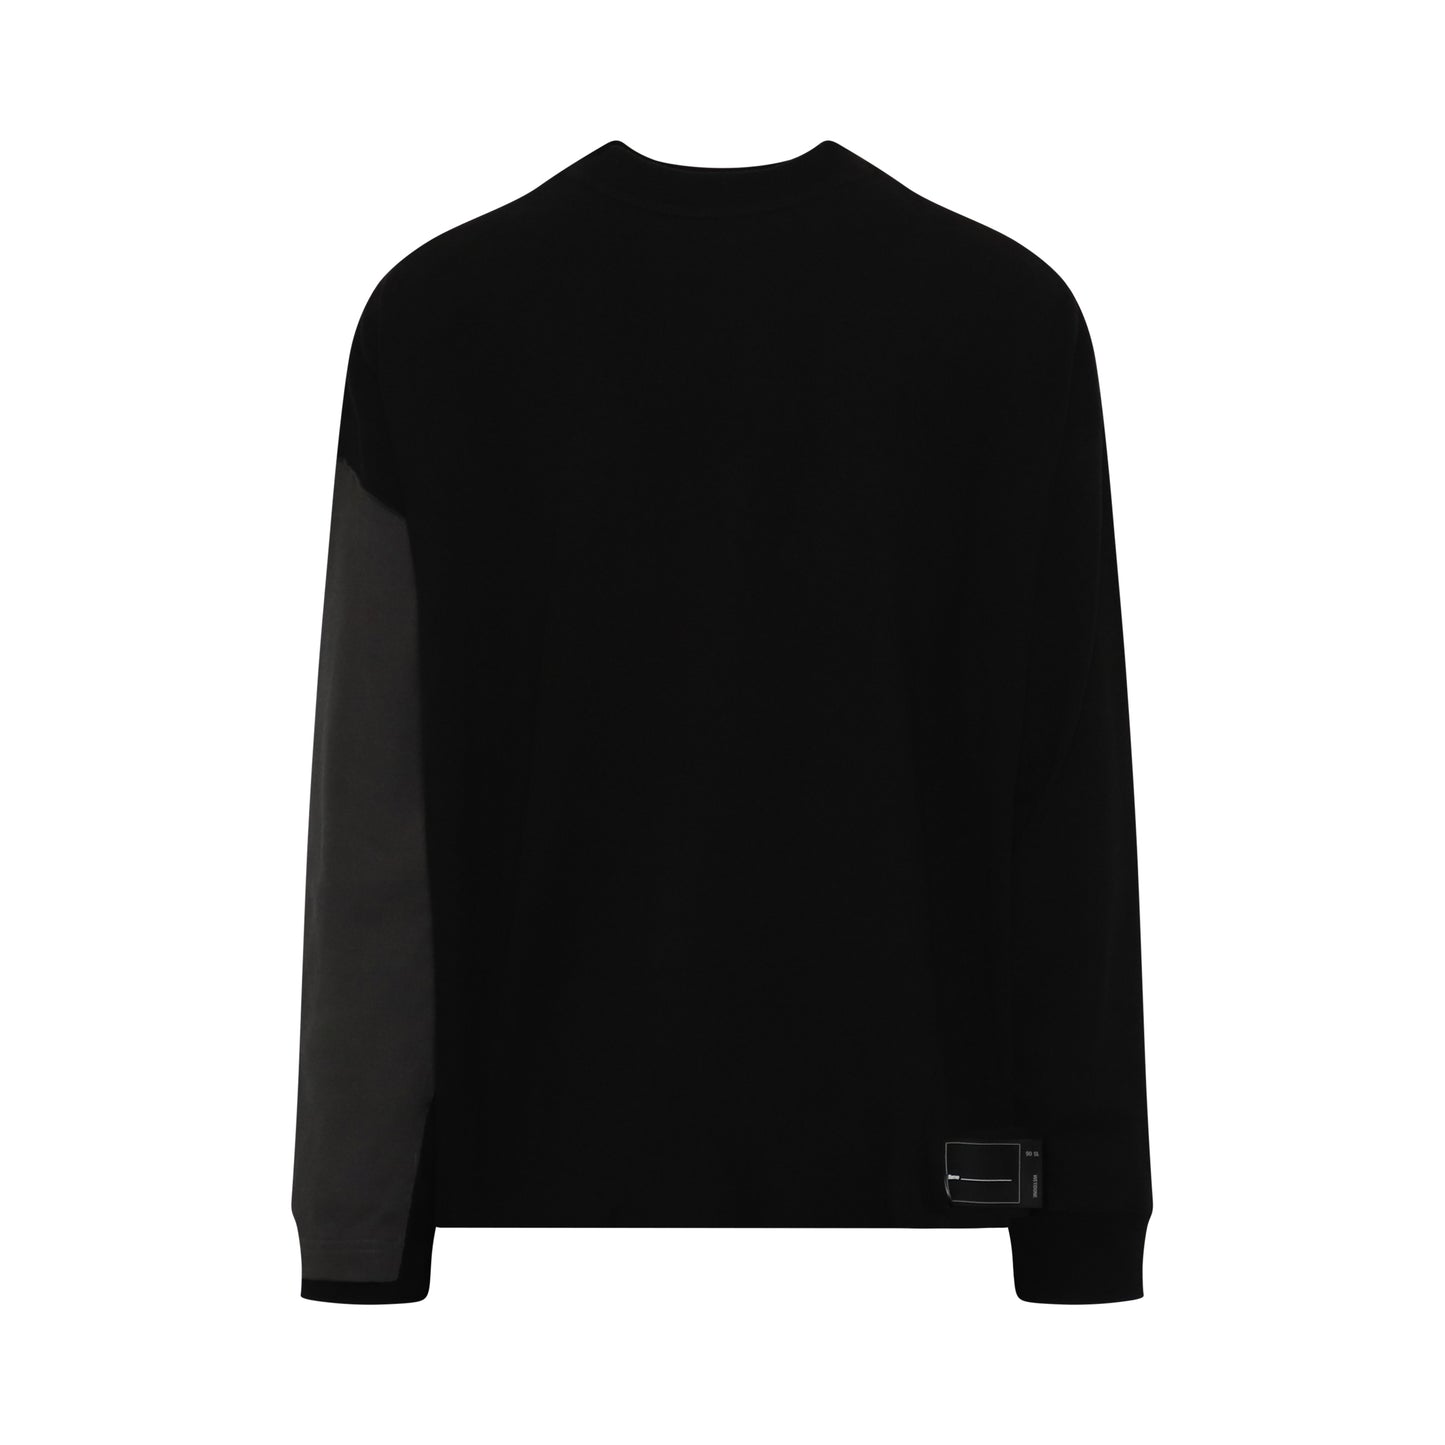 Remake Logo Long Sleeve T-Shirt in Black